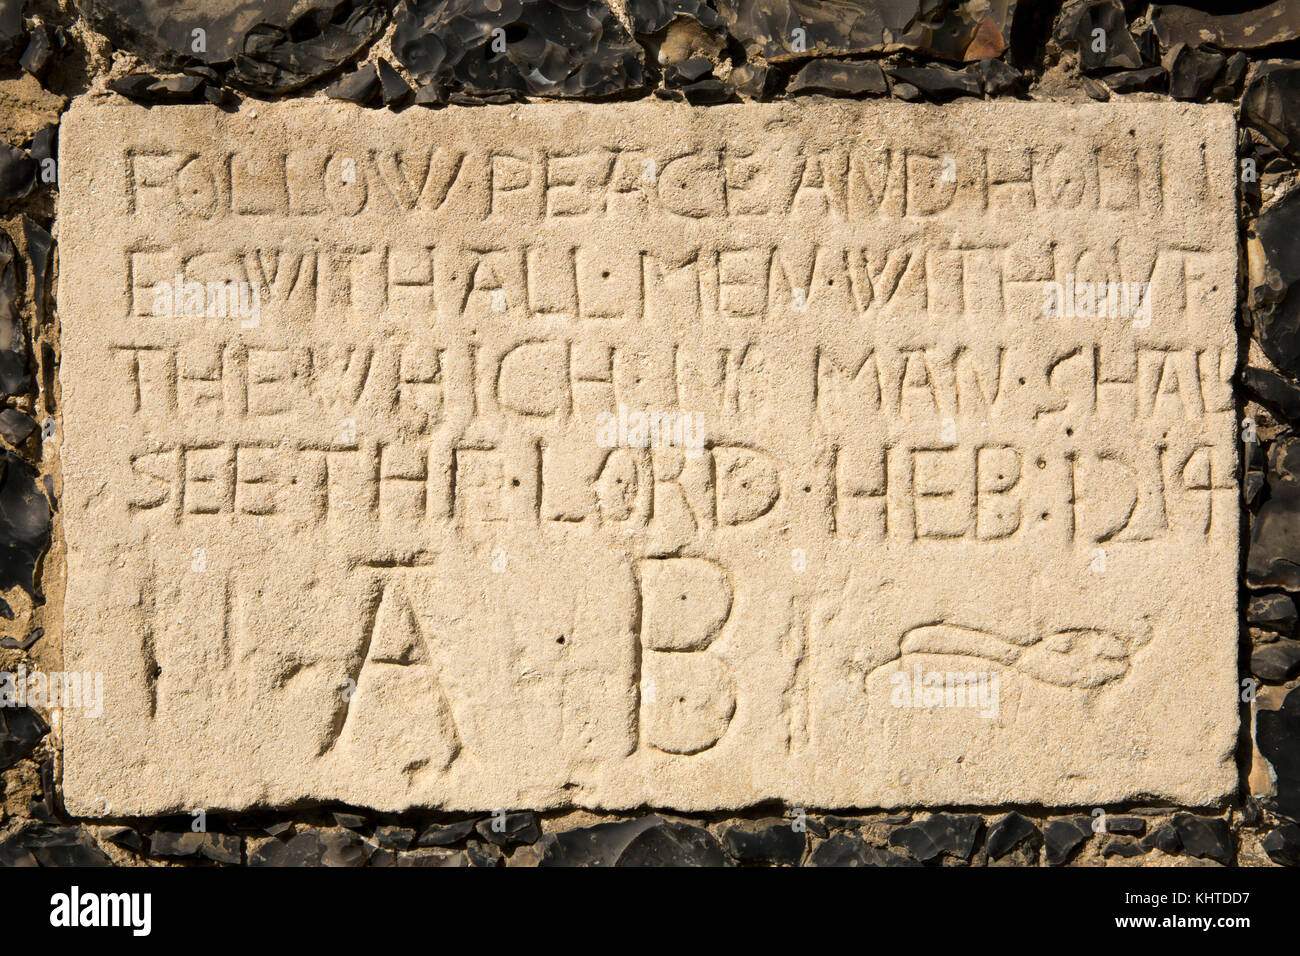 UK, England, Norfolk, Thetford, Old Bury Road, 1610 Richard Fulmerston Almshouses, biblical quote stone, Hebrews 12:14 Stock Photo